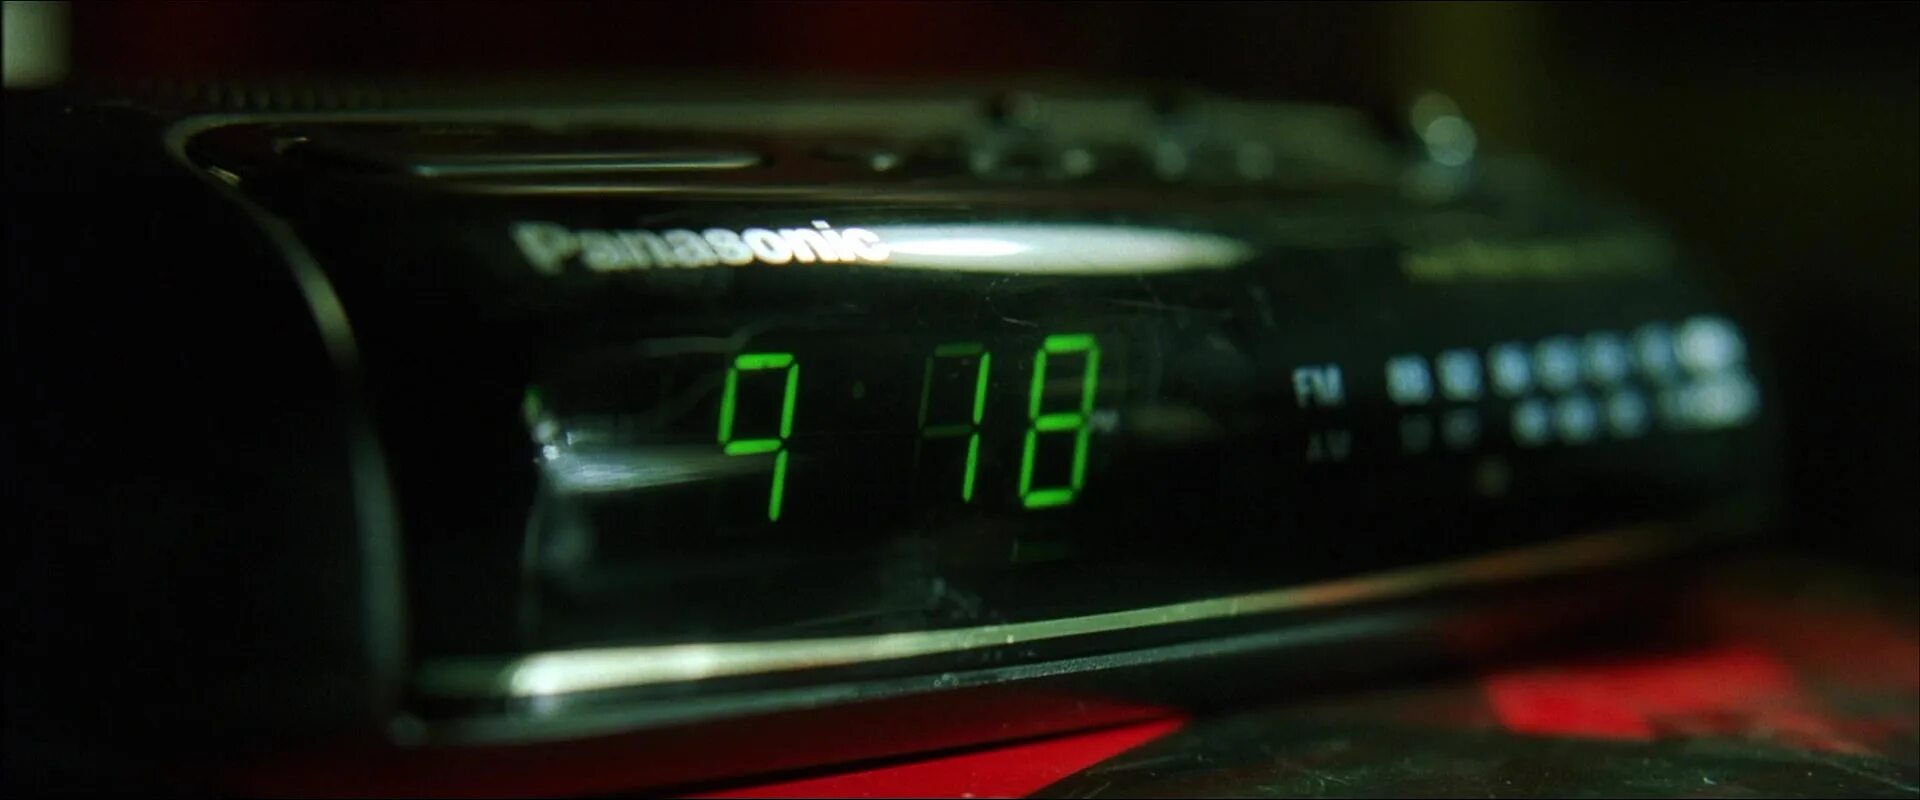 Часы из матрицы. Часы Panasonic из матрицы. Будильник Нео из матрицы часы. Матрица 1999 будильник Нео.